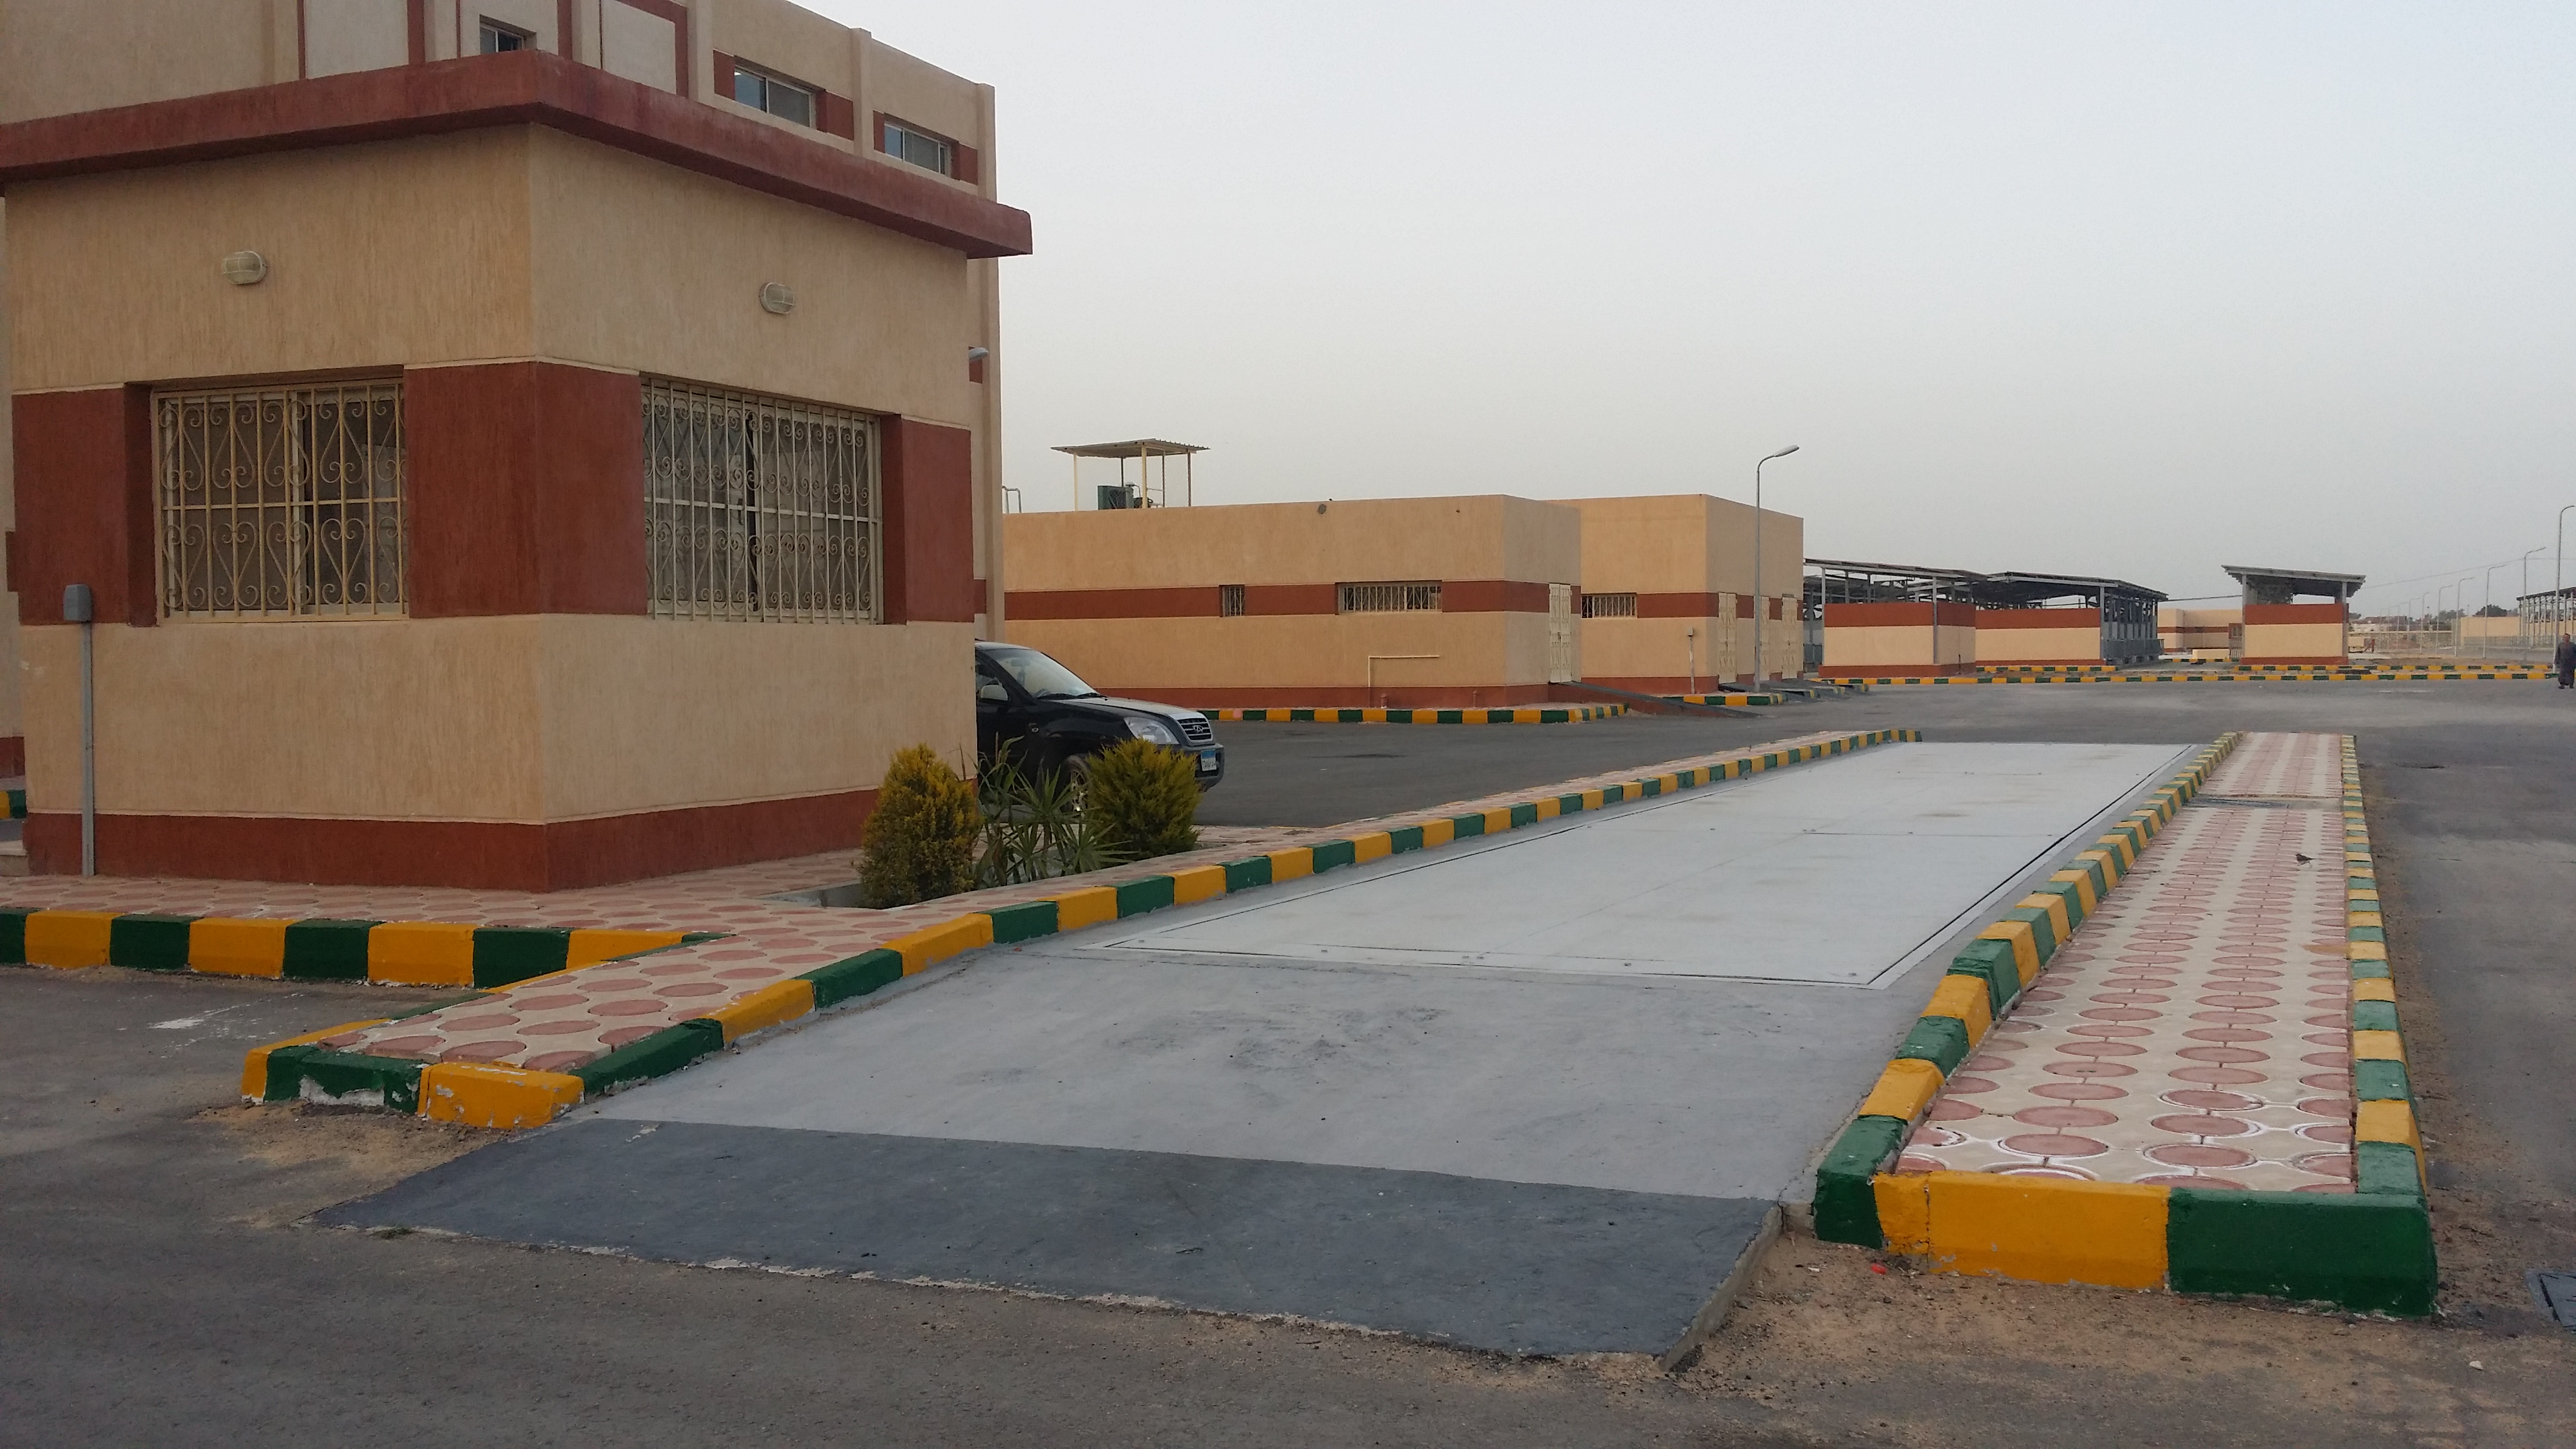 wall-E 'bench and floor scales' | الشركة العربية للتوريدات والصناعات الهندسية | El Arabia For Supplies and Engineering Industries